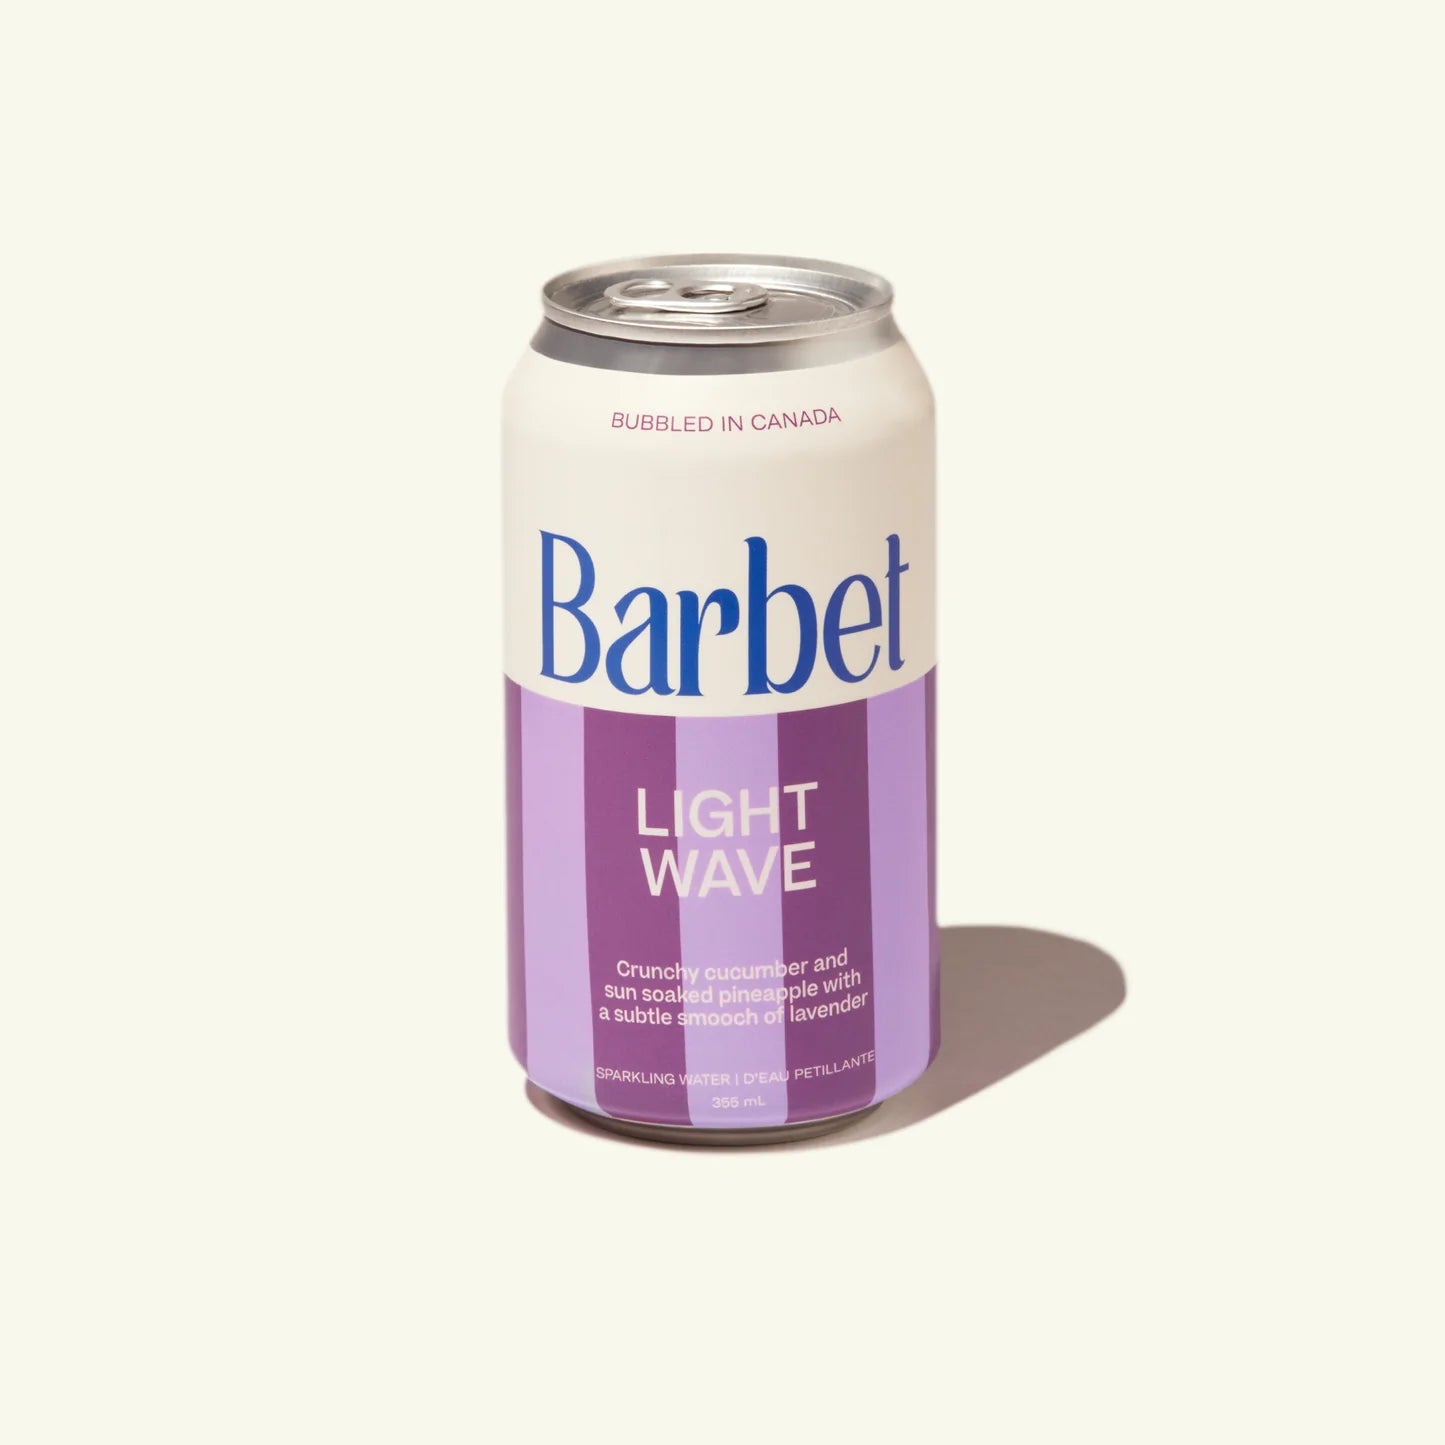 Barbet Drinks